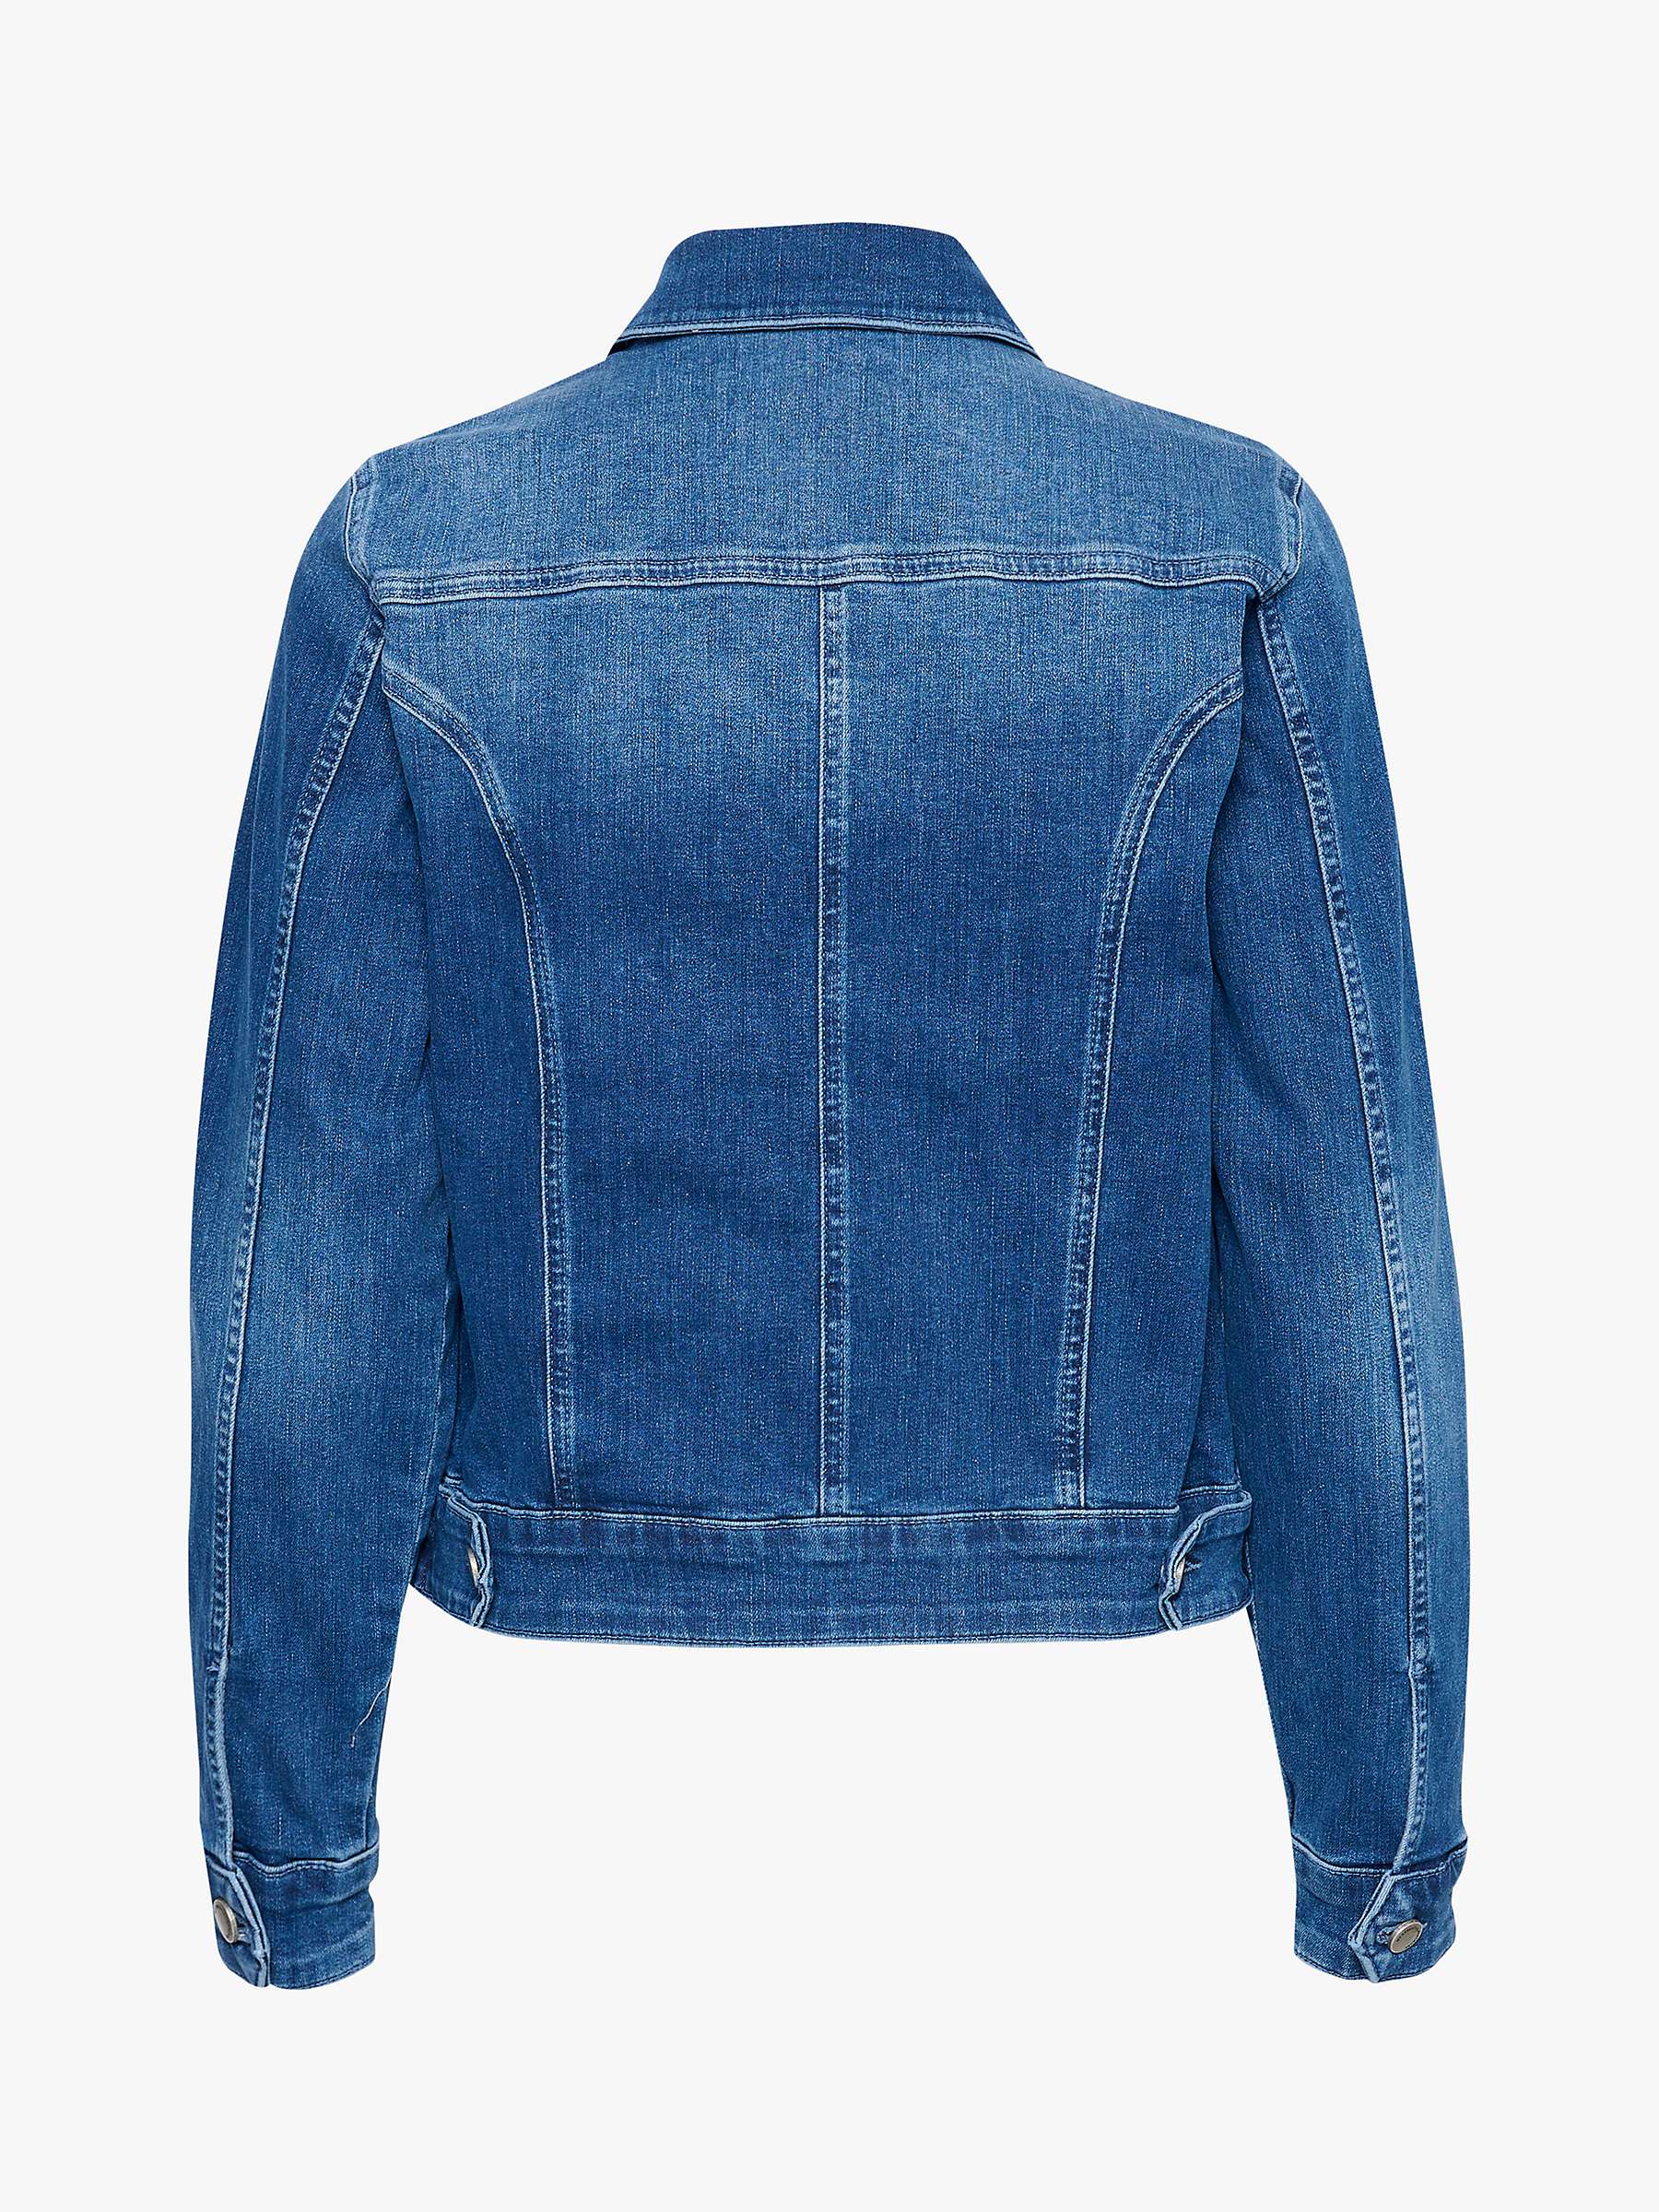 Buy MY ESSENTIAL WARDROBE Regular Fit Denim Jacket, Medium Blue Wash Online at johnlewis.com